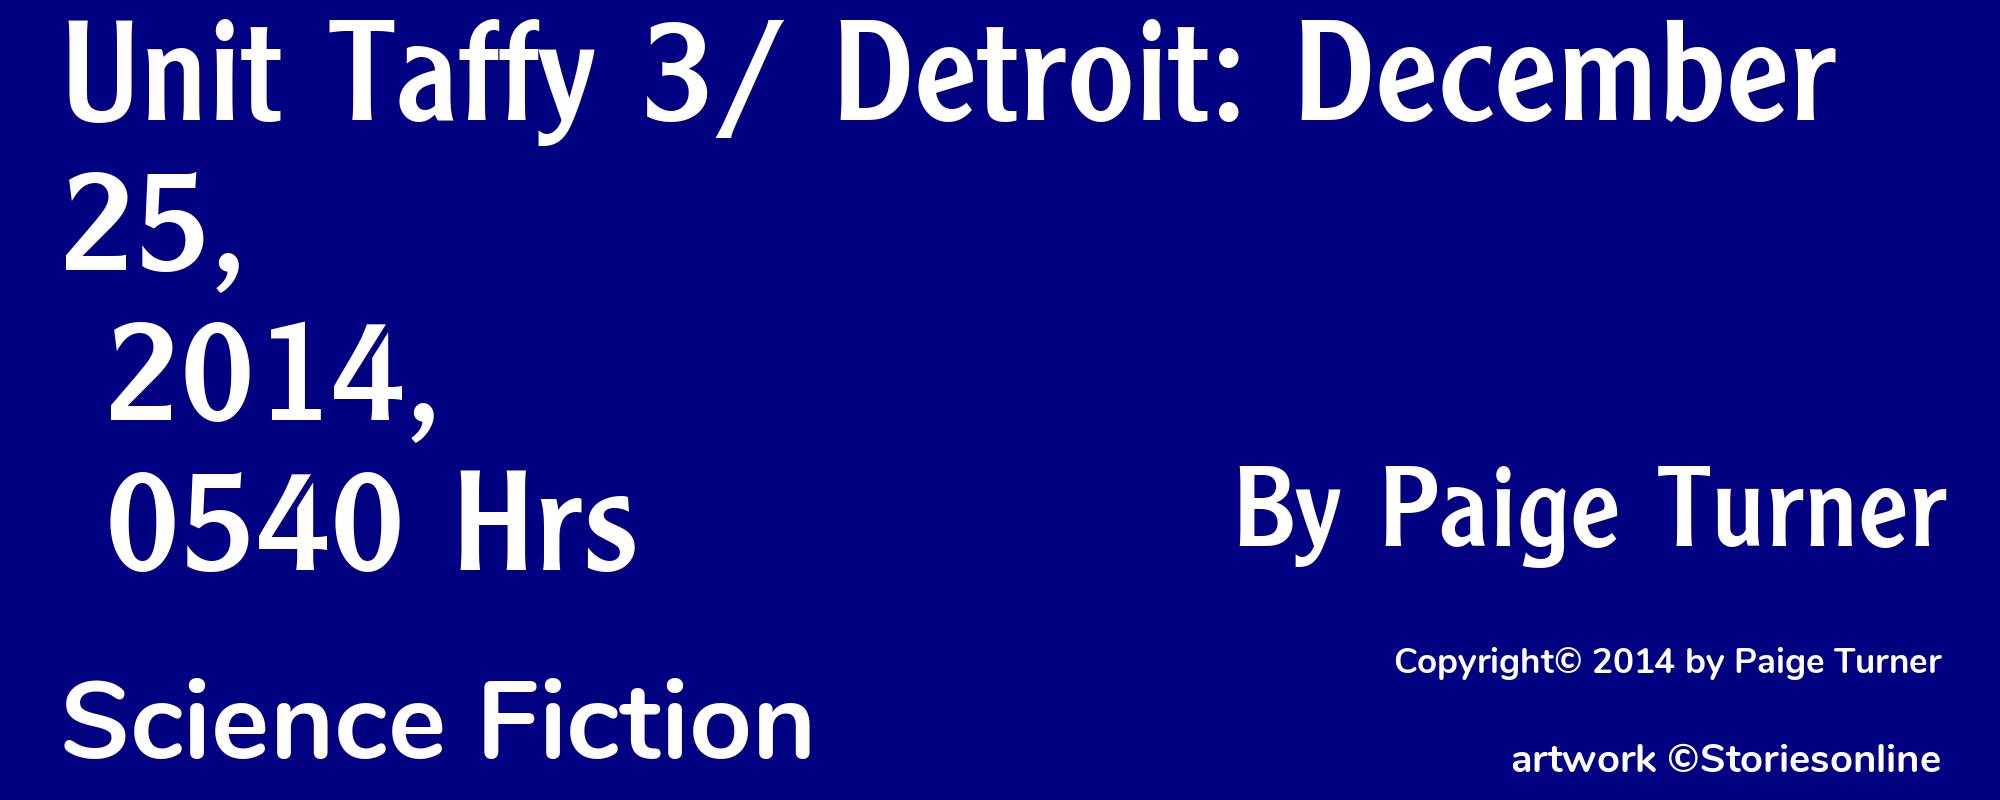 Unit Taffy 3/ Detroit: December 25, 2014, 0540 Hrs - Cover